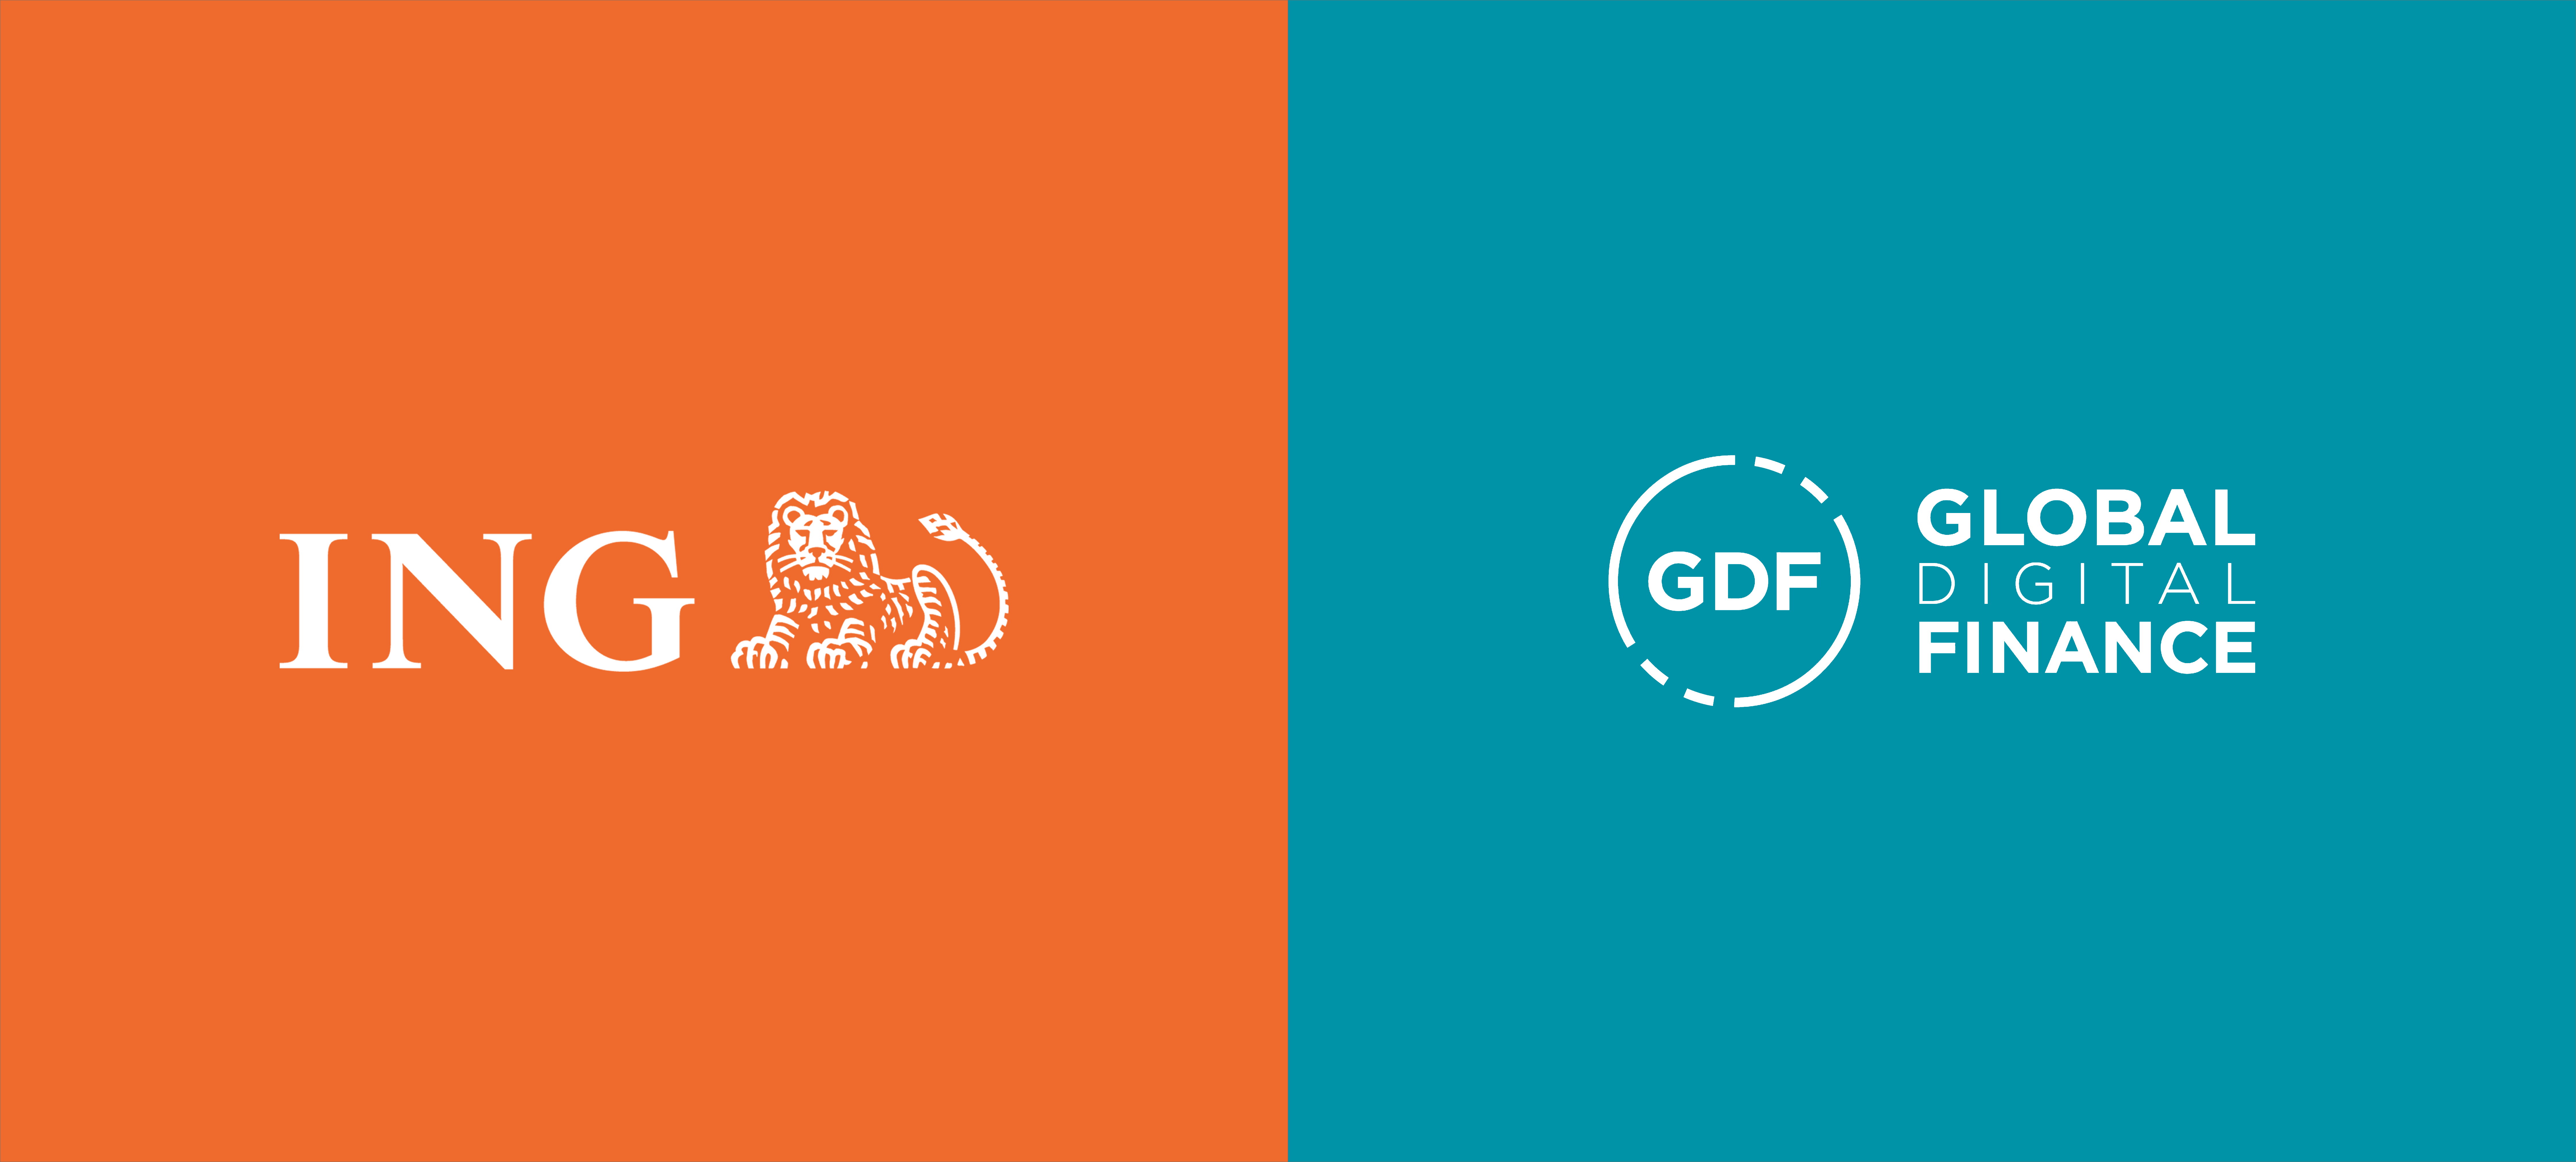 Dutch bank ING joins Global Digital Finance (GDF)